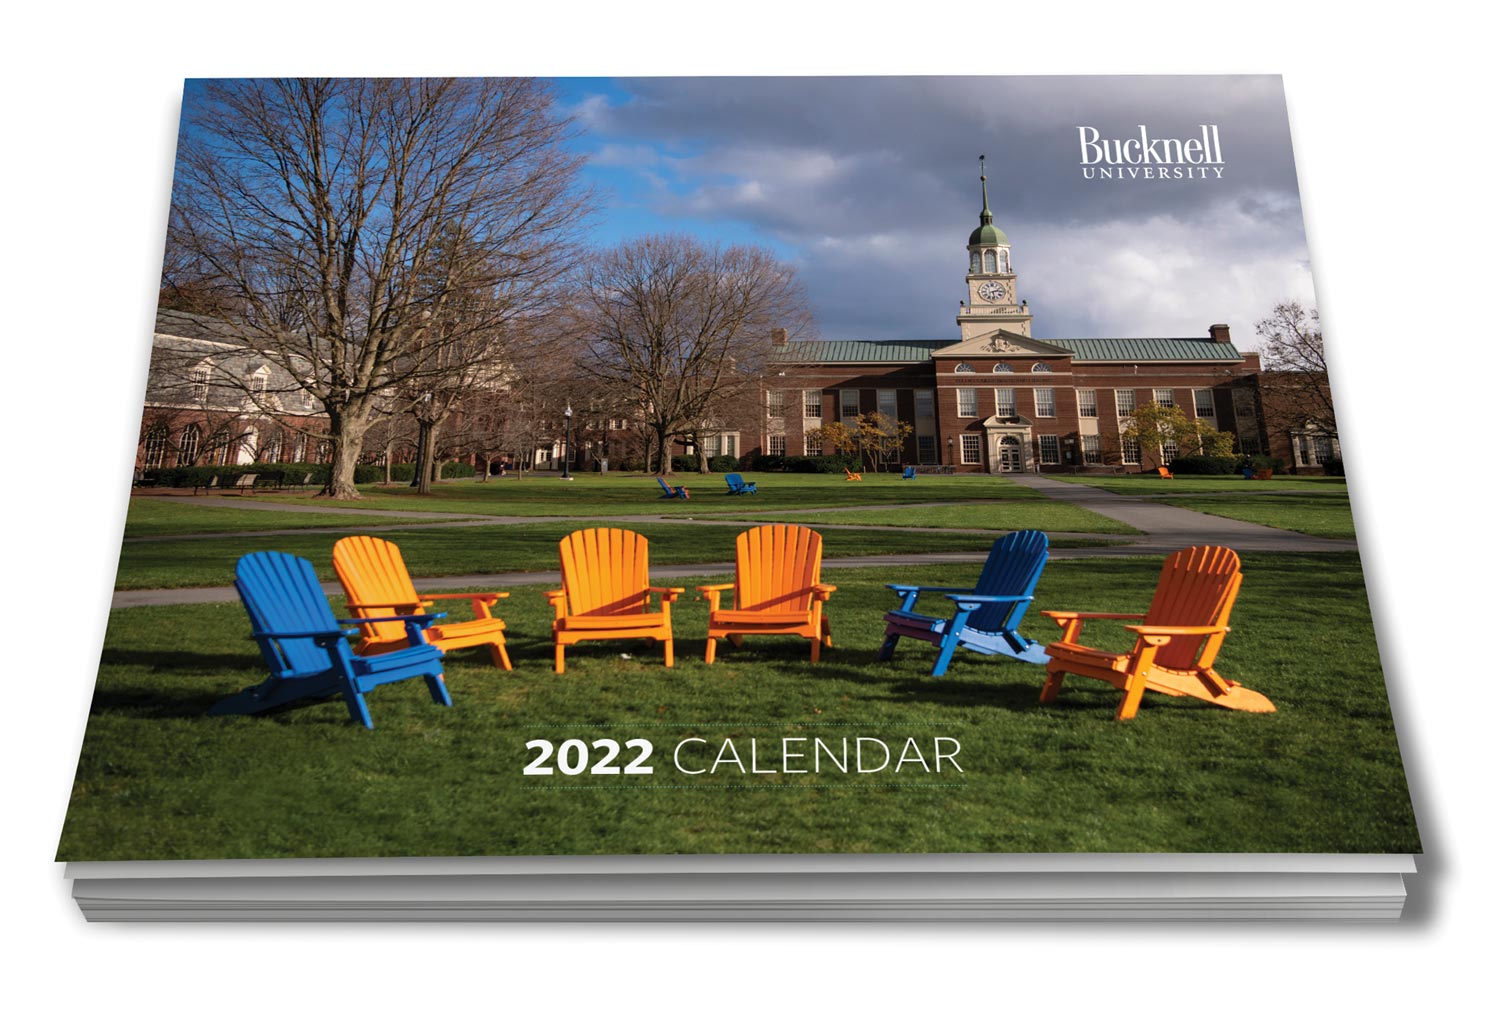 Bucknell University 2022 calendar cover